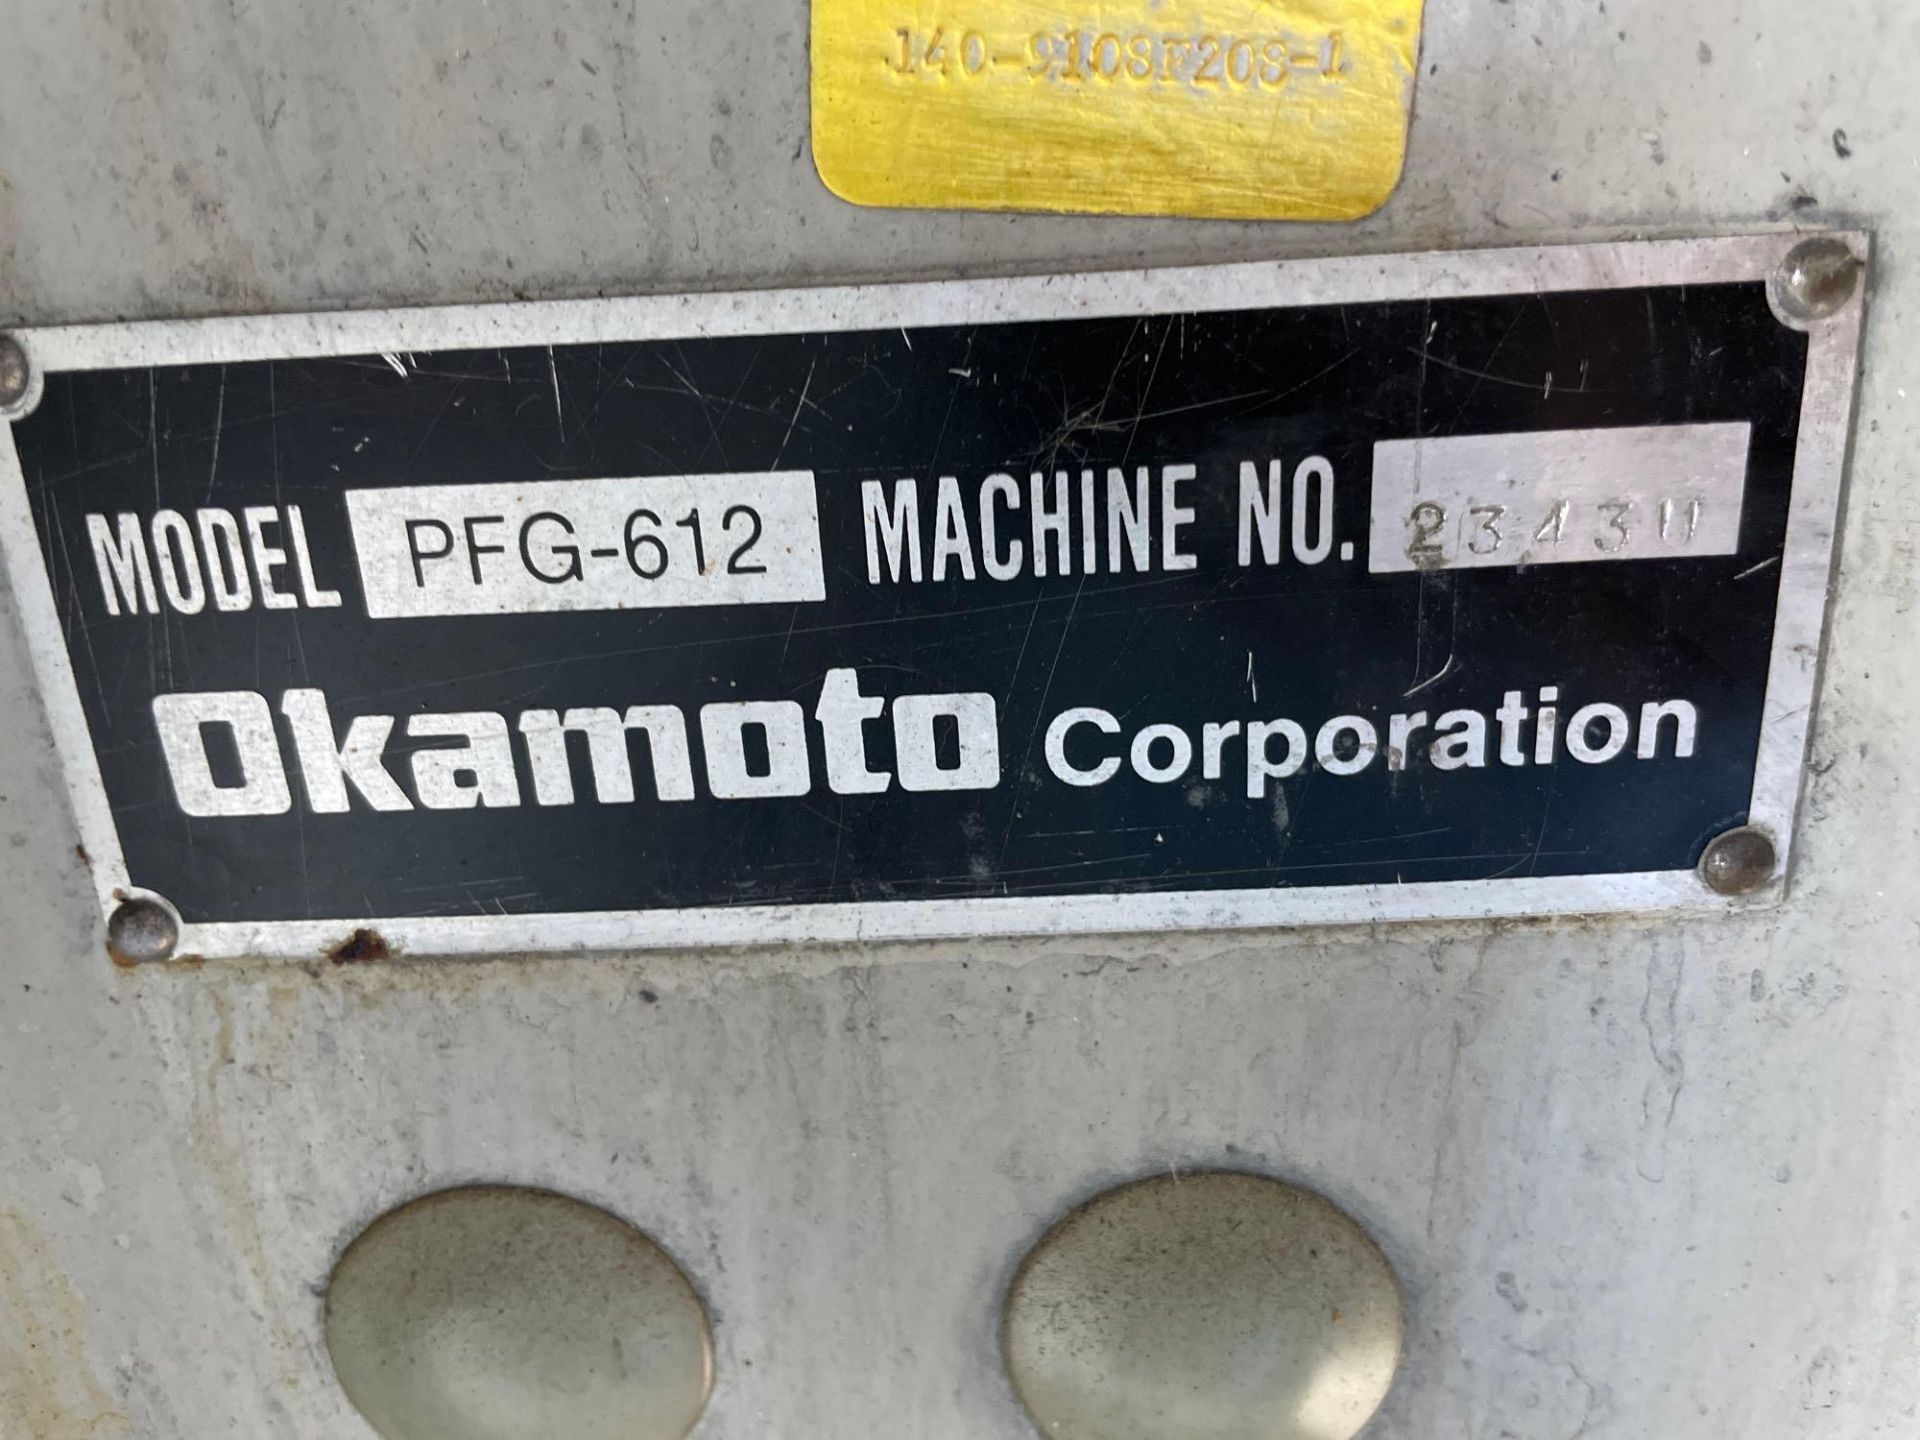 Okamoto PFG - 612 Surface Grinder, s/n 234311 - Image 6 of 6